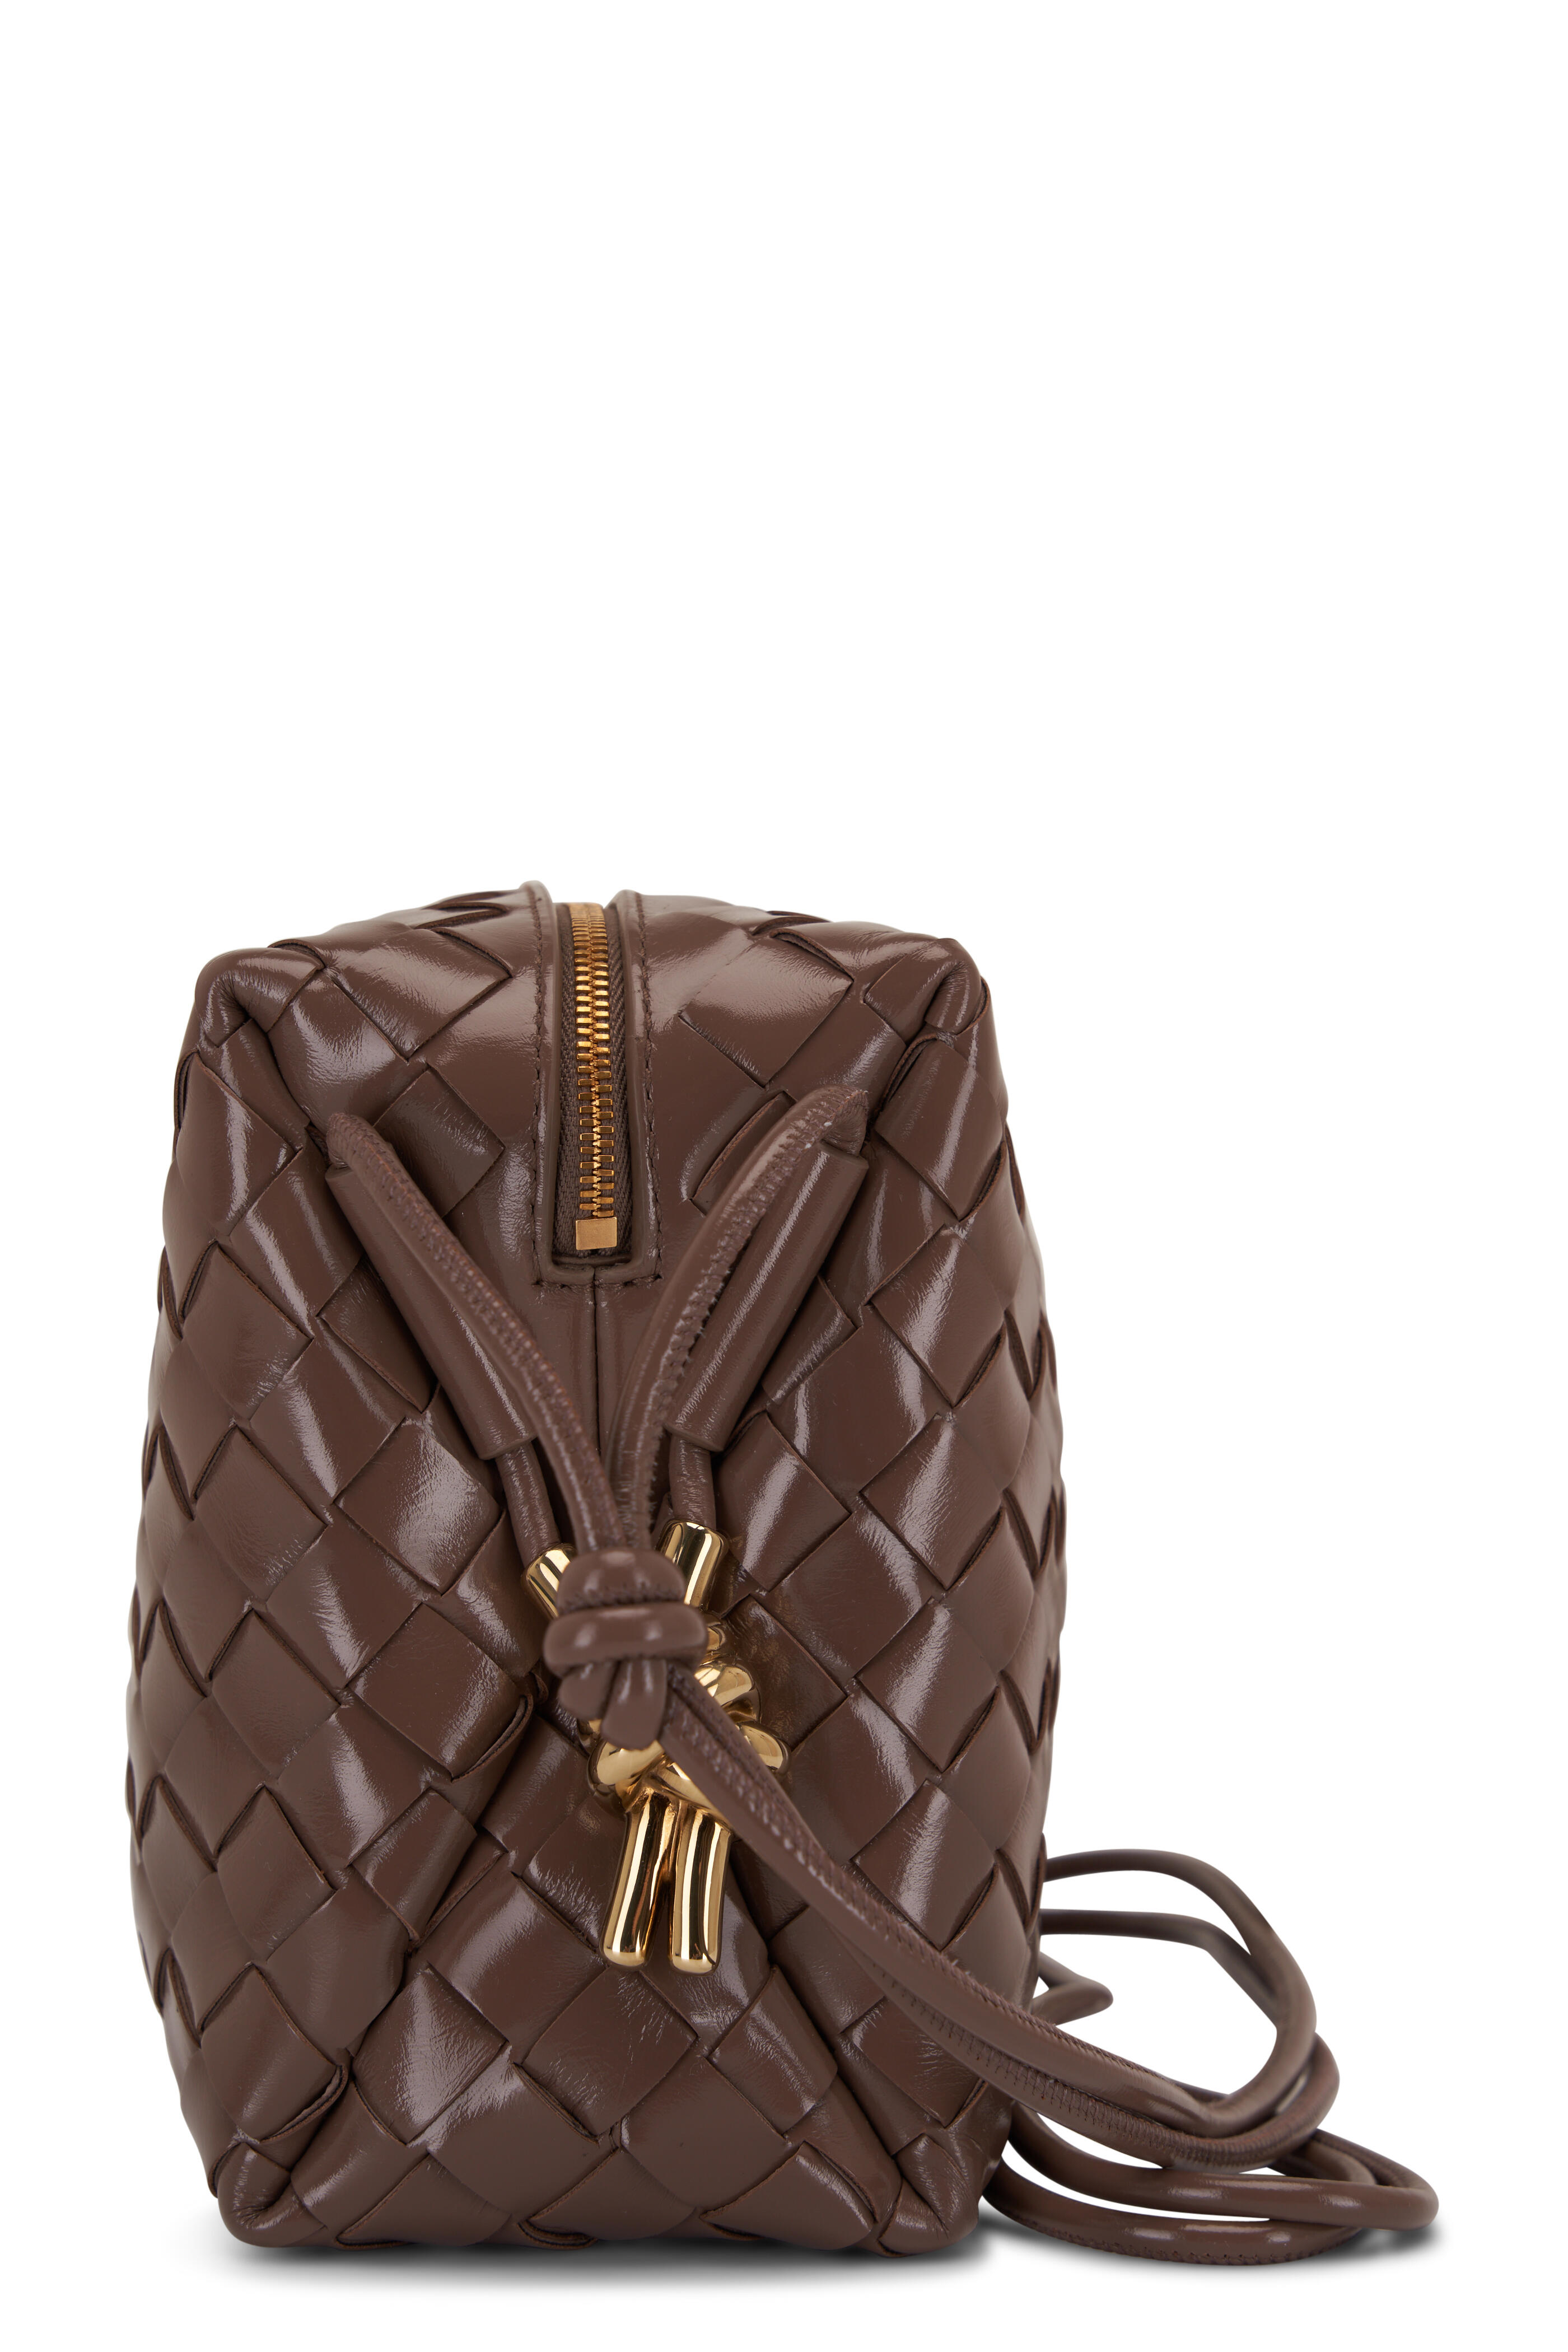 Bottega Veneta Small Loop Intrecciato Leather Shoulder Bag In Porridge Gold